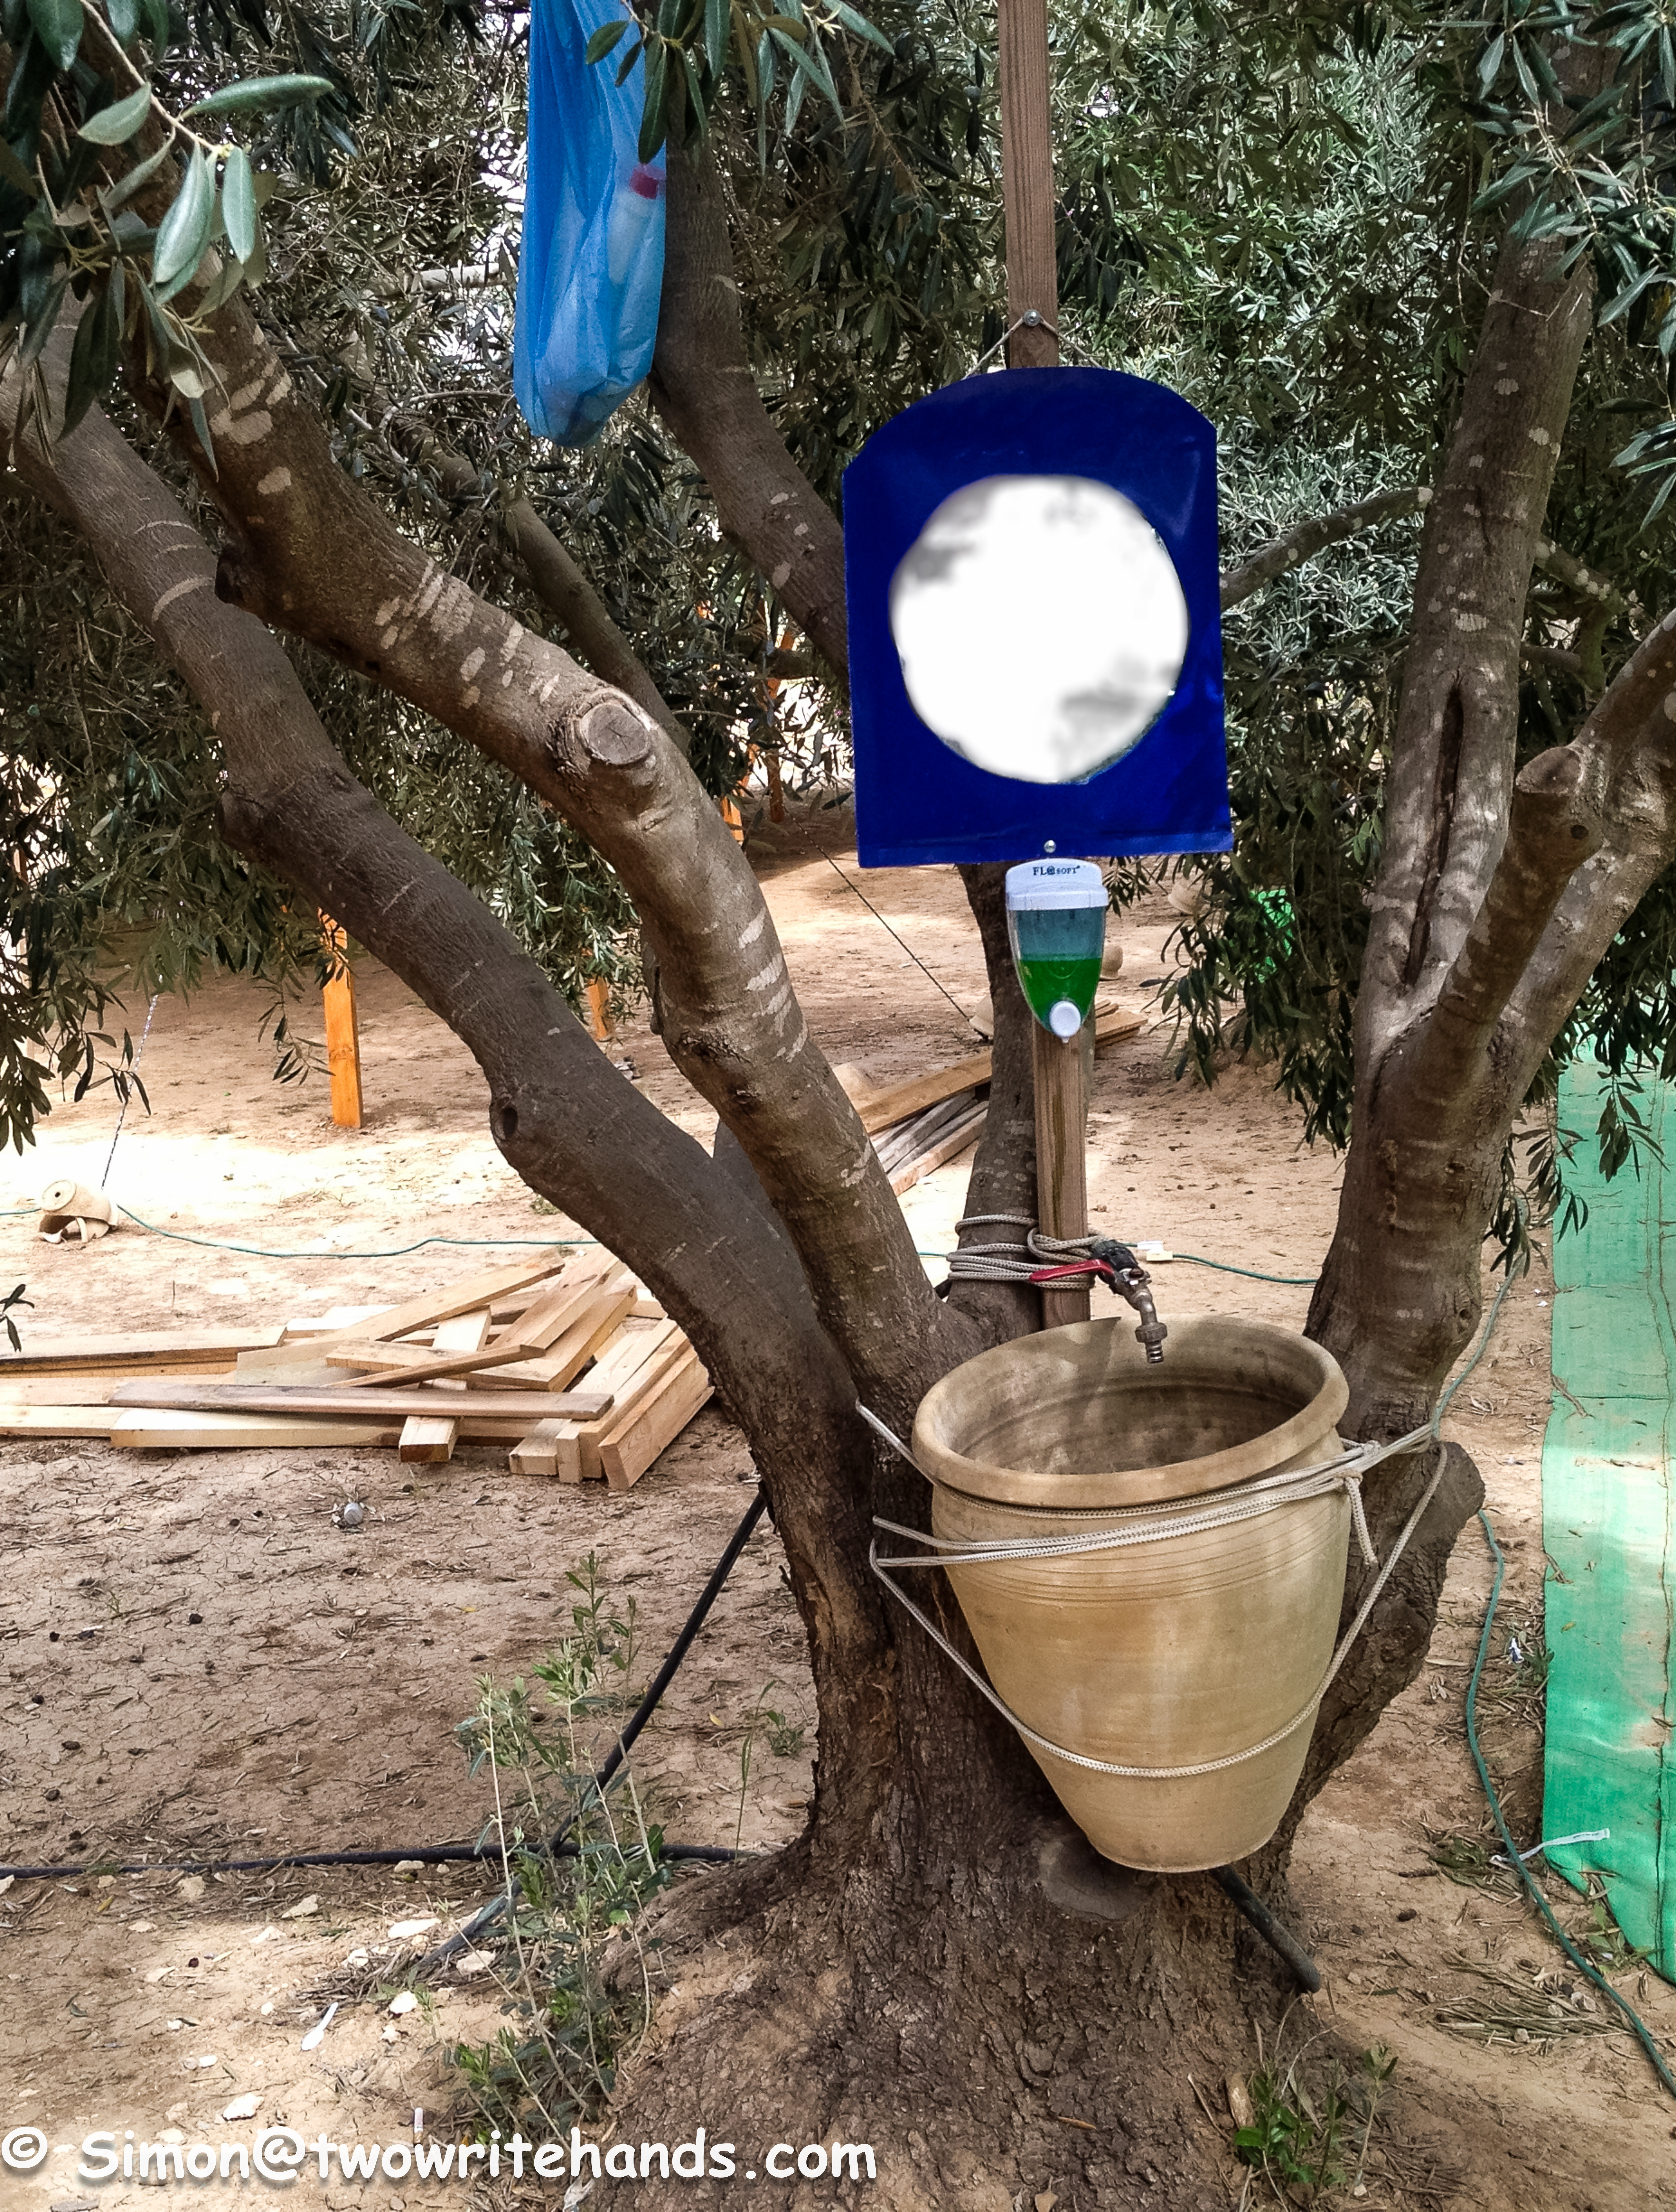 [Weekly Wow #047] Bedouin Hospitality in Israel’s Negev Desert: